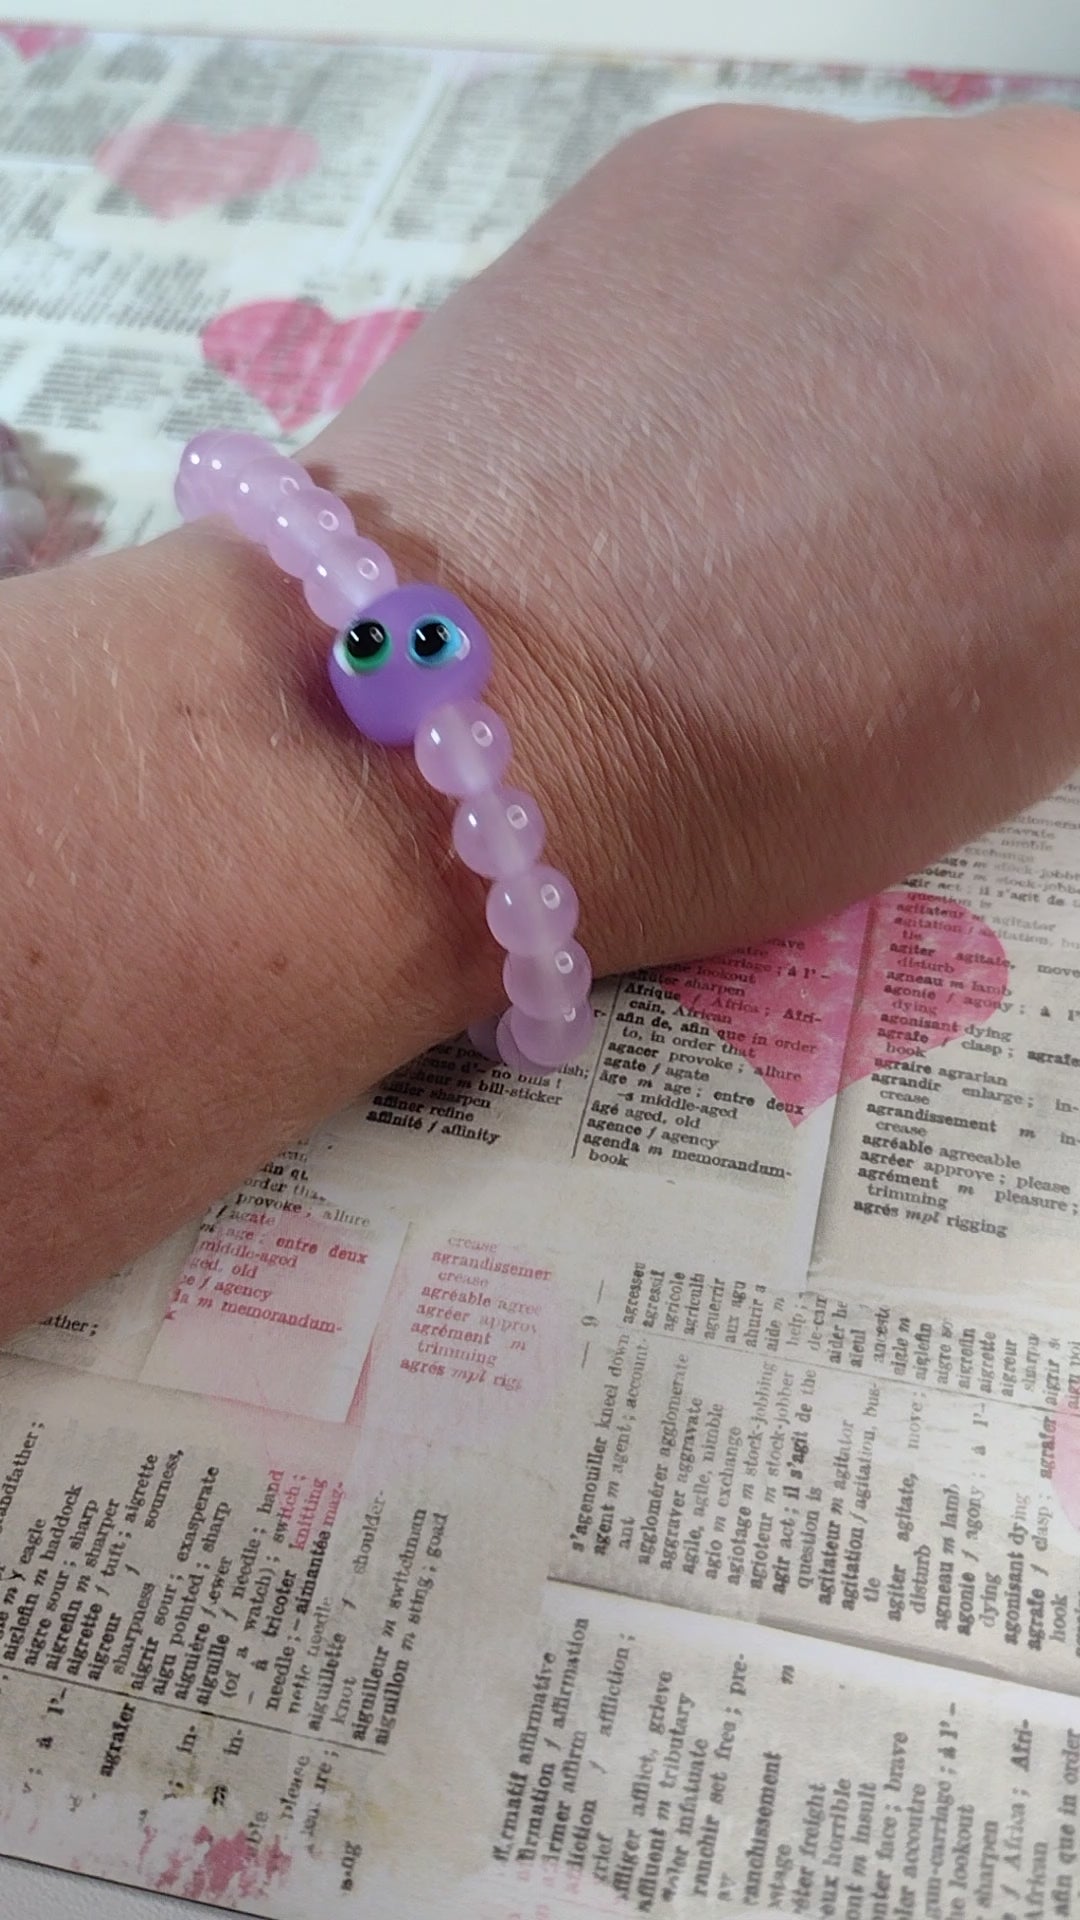 Video of Lilac buddy bead bracelet being worn